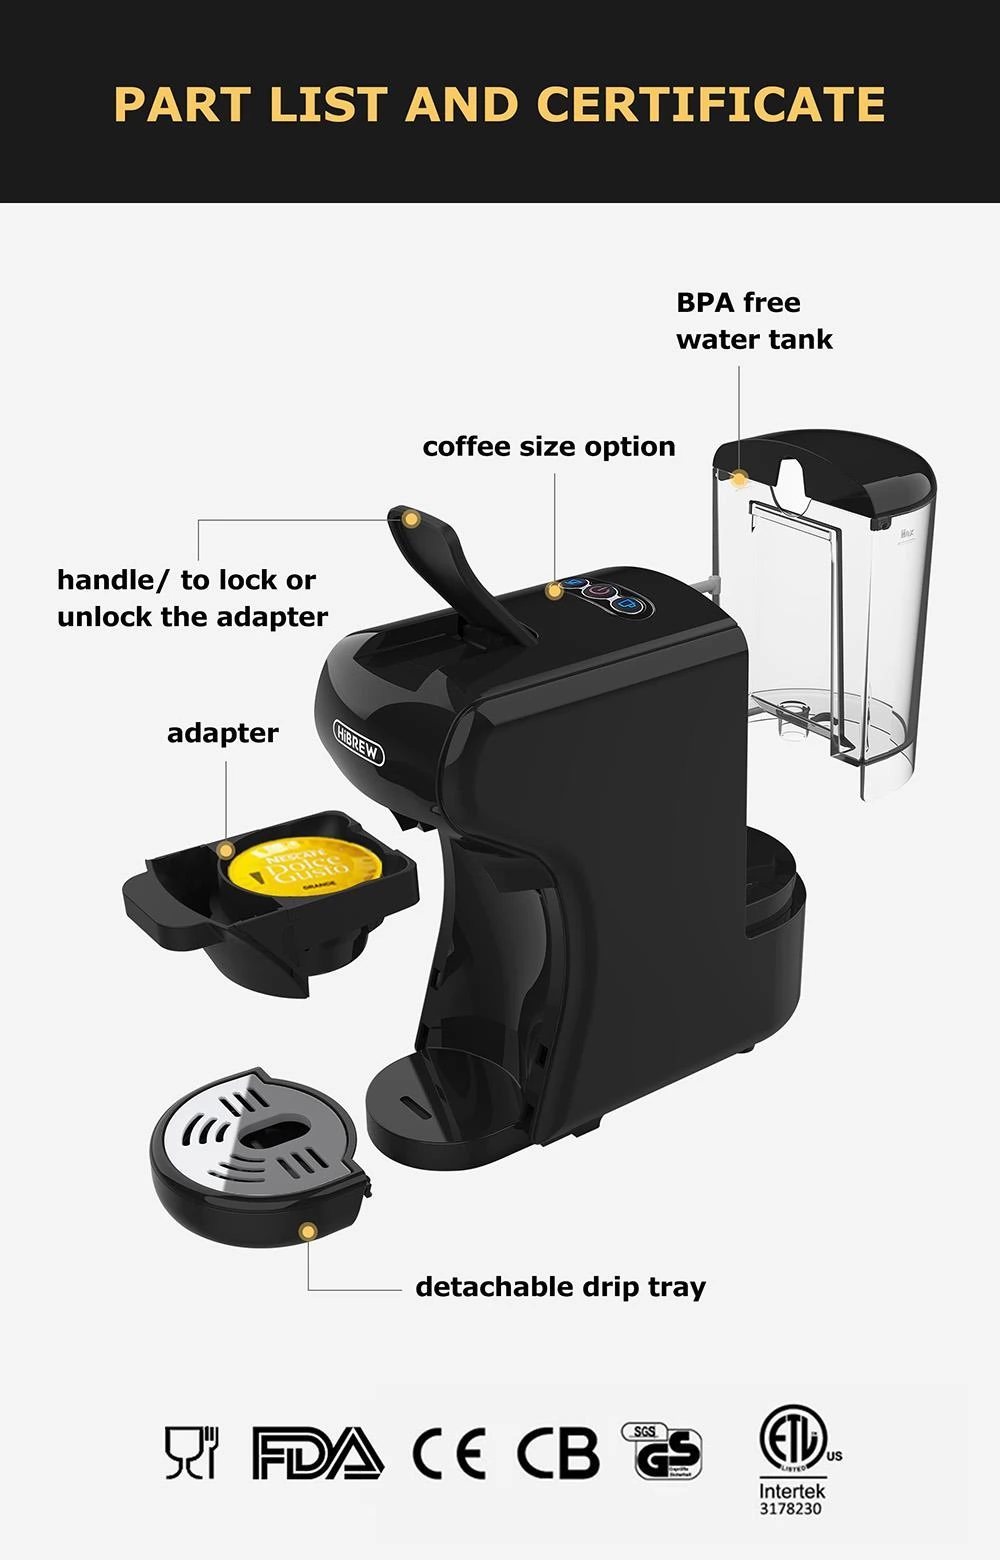 Hot Cold Brew Coffee Machine 4 in1 Multiple Capsule Espresso Pod Maker With  Tray